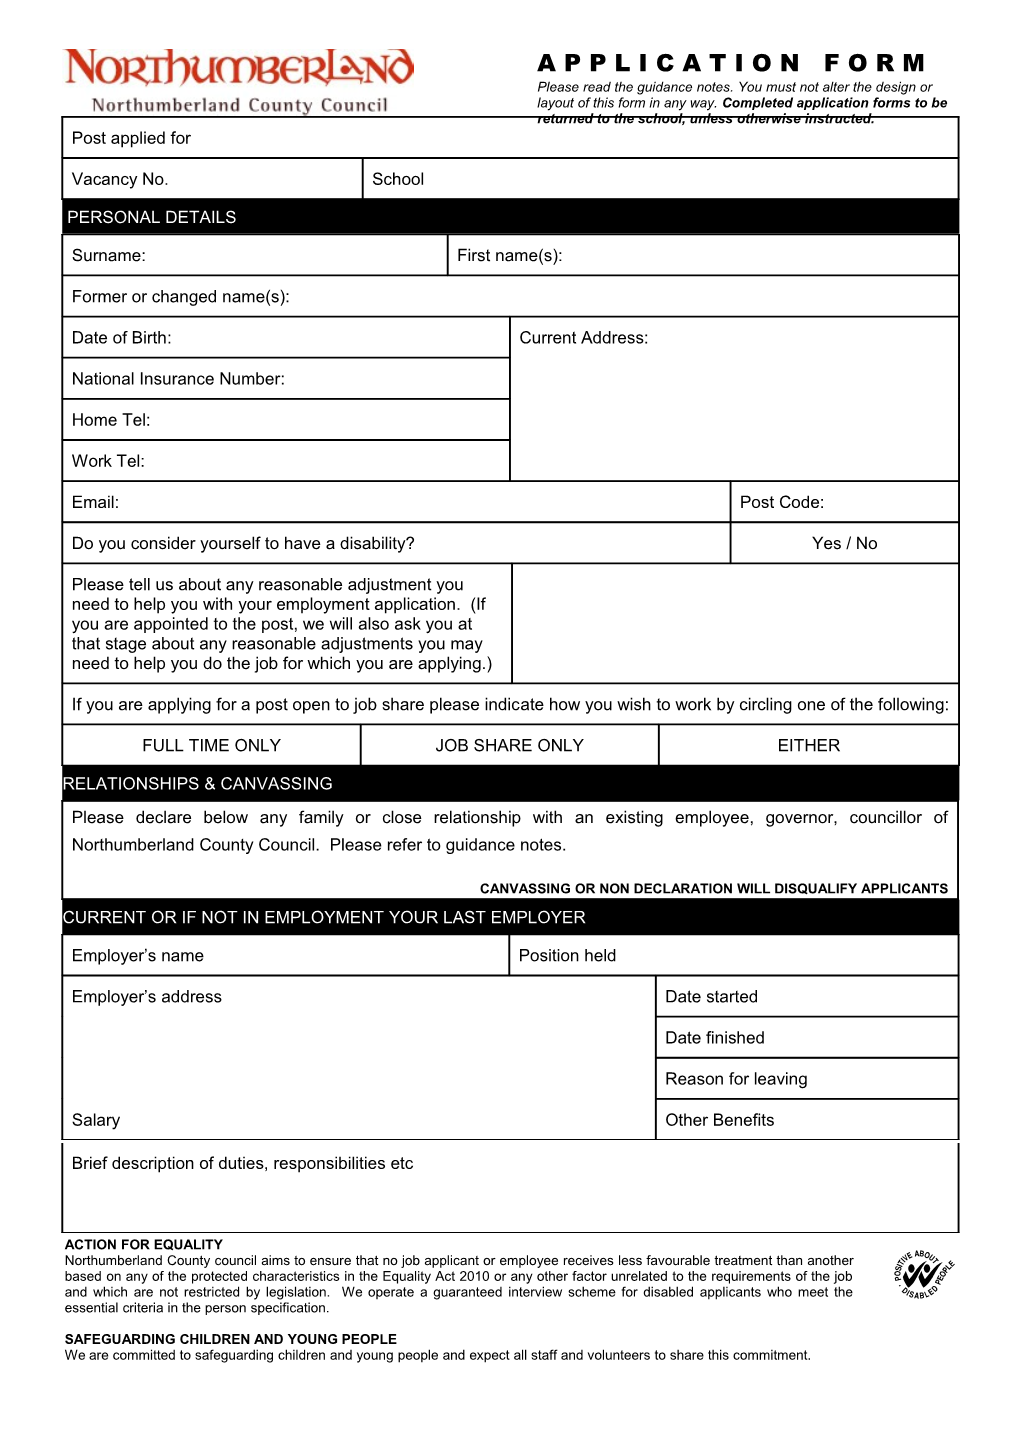 Employment Application Form Oct 2010